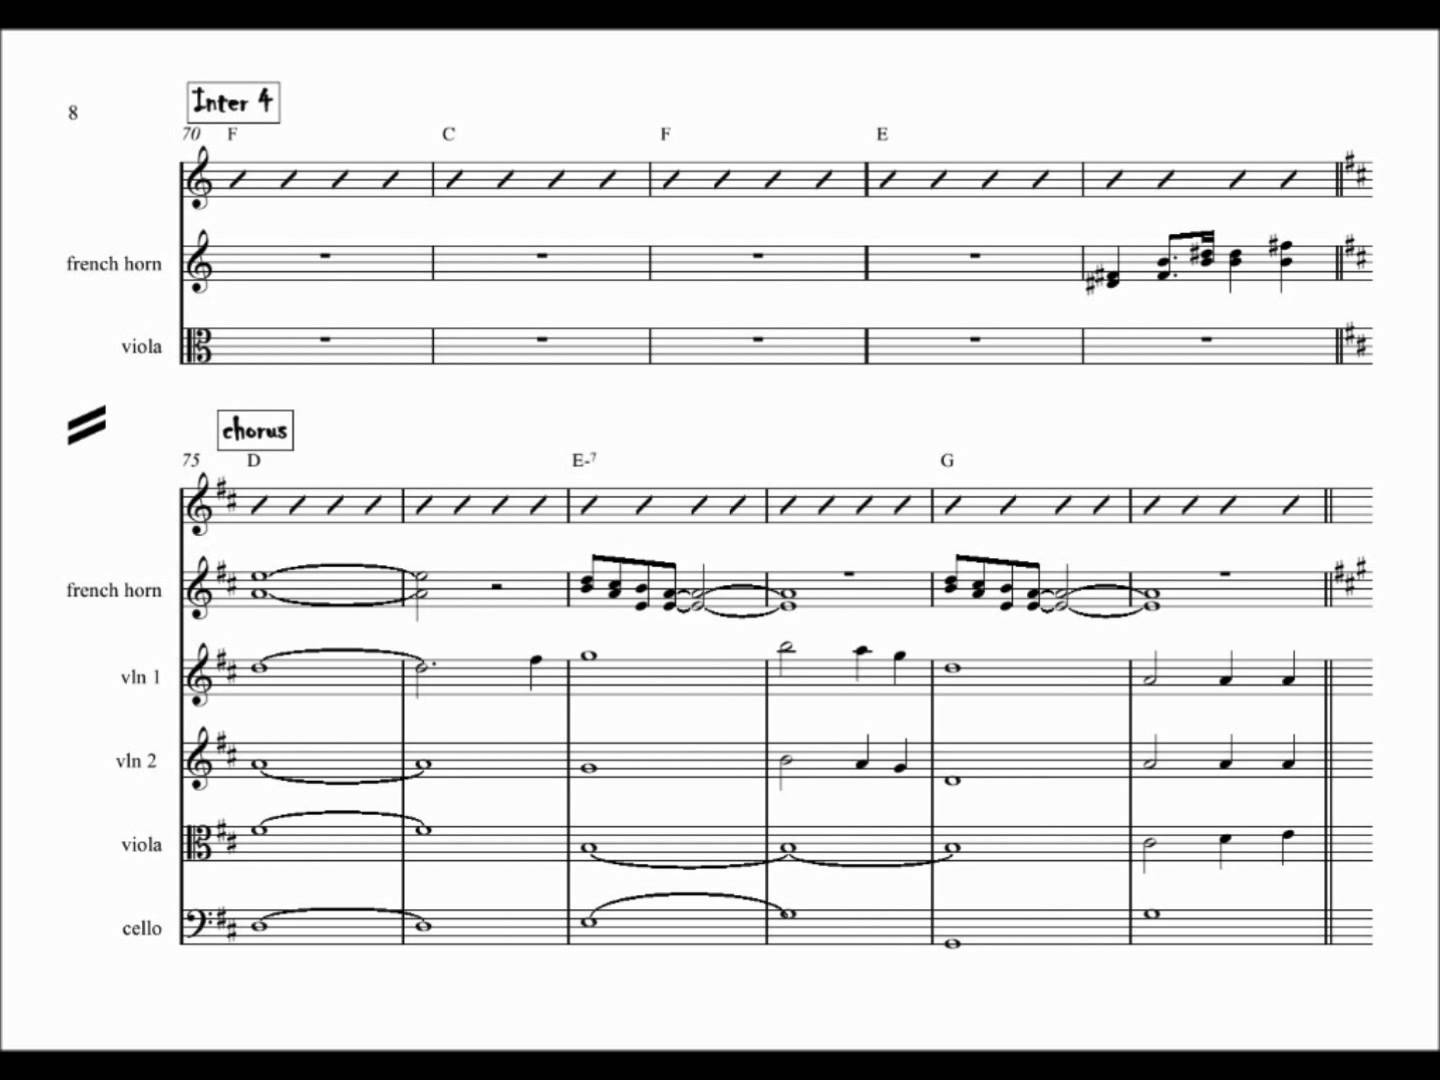 La partitura orquestal - LeitersBlues